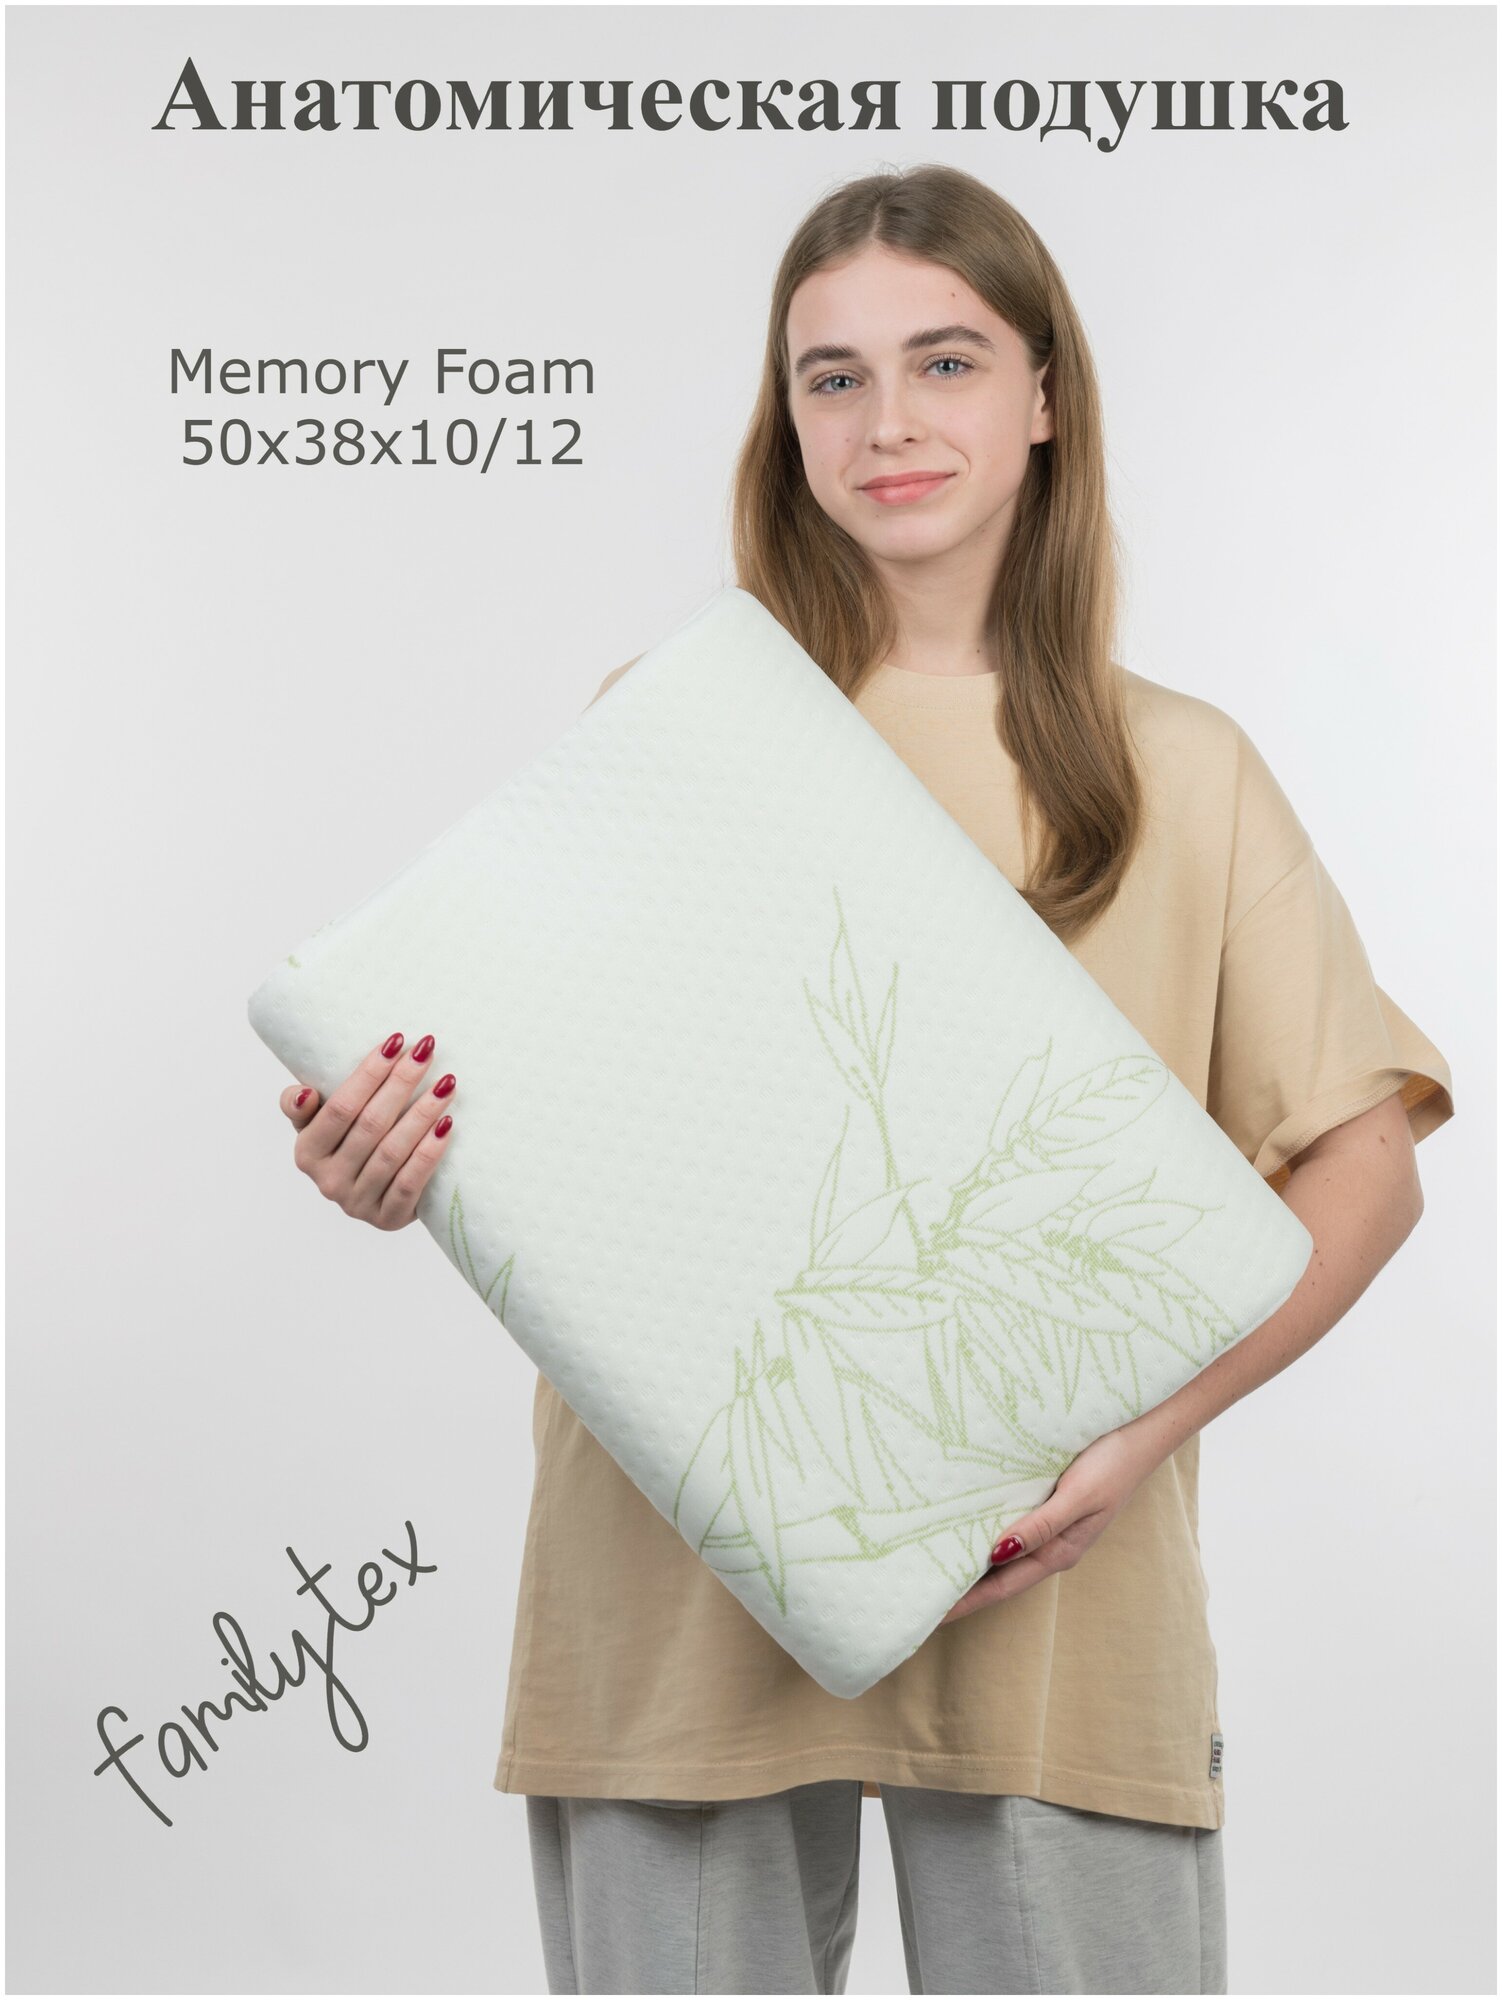 Подушка анатомическая для сна, Familytex, подушка с эффектом памяти, артикул ппум(50Х38Х10/12)Б